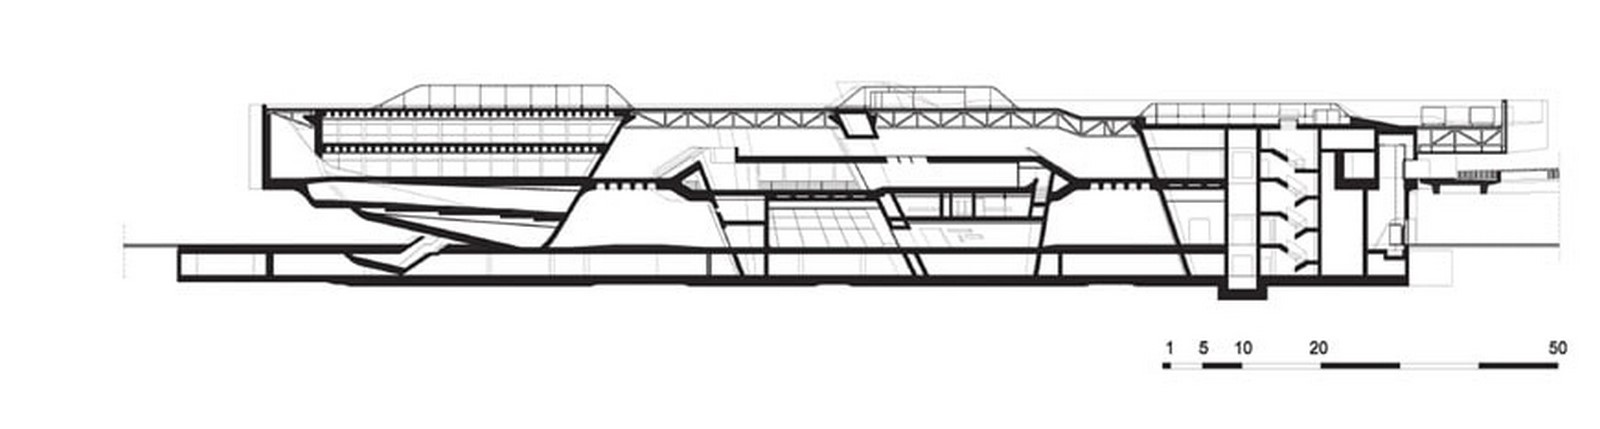 Phaeno Science Centre by Zaha Hadid: An architectural adventureplayground - Sheet5